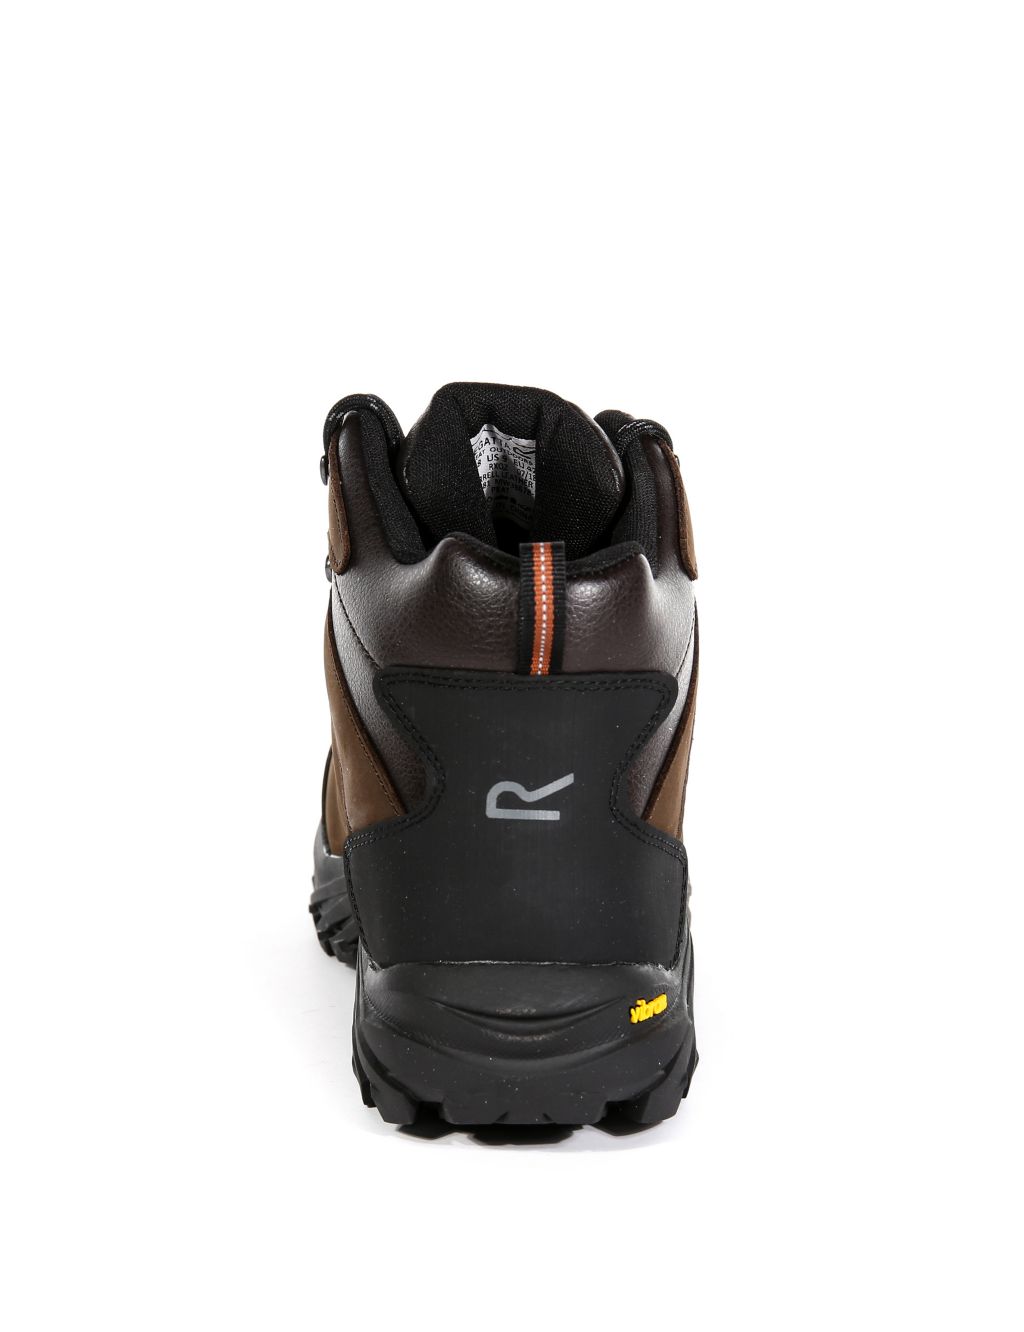 Burrell Leather Waterproof Walking Boots image 3